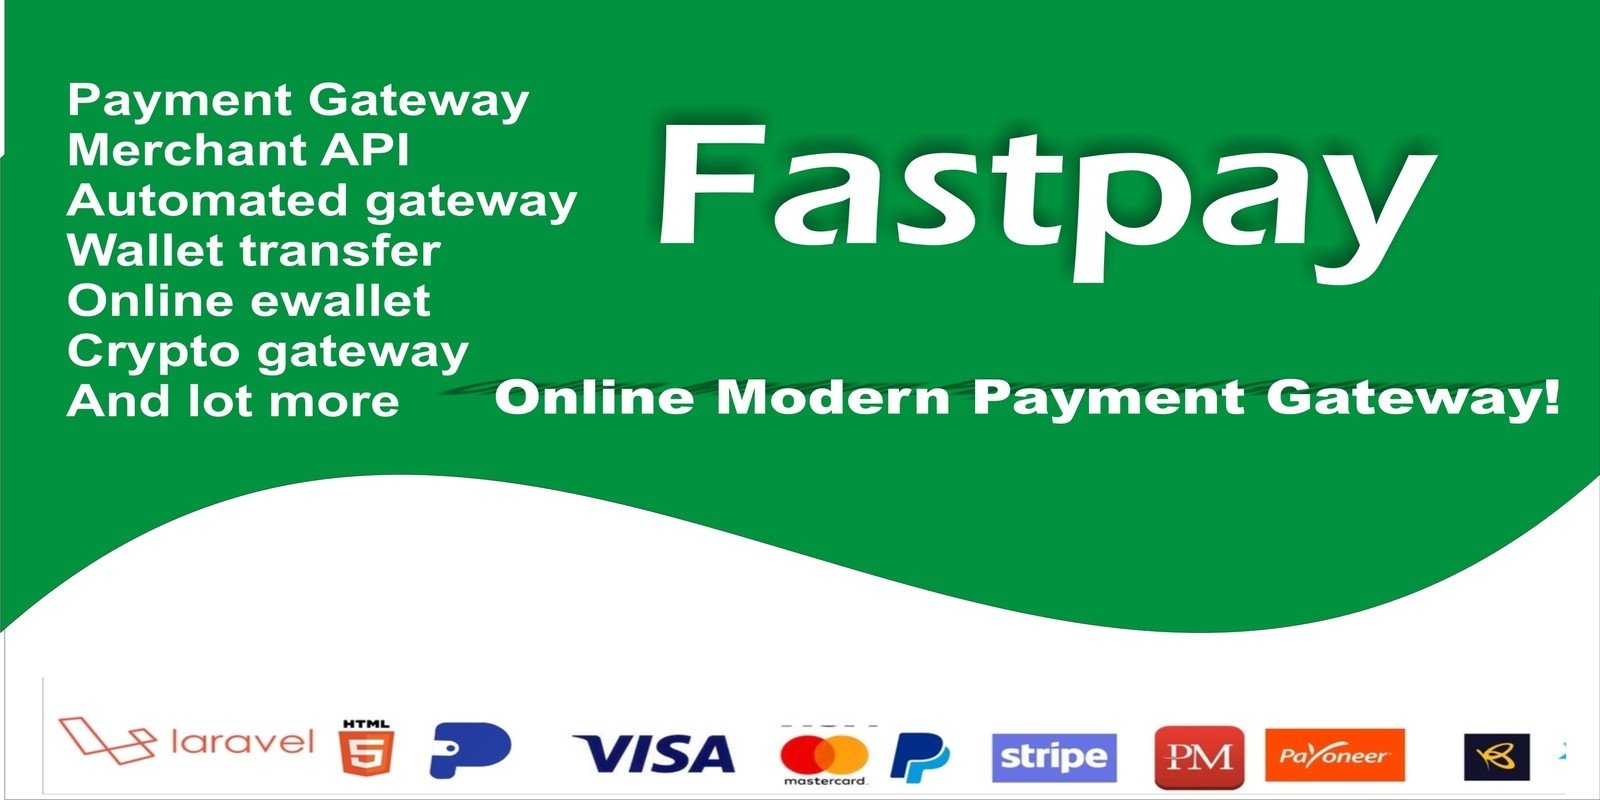 Fastpay - Online Modern Payment Gateway